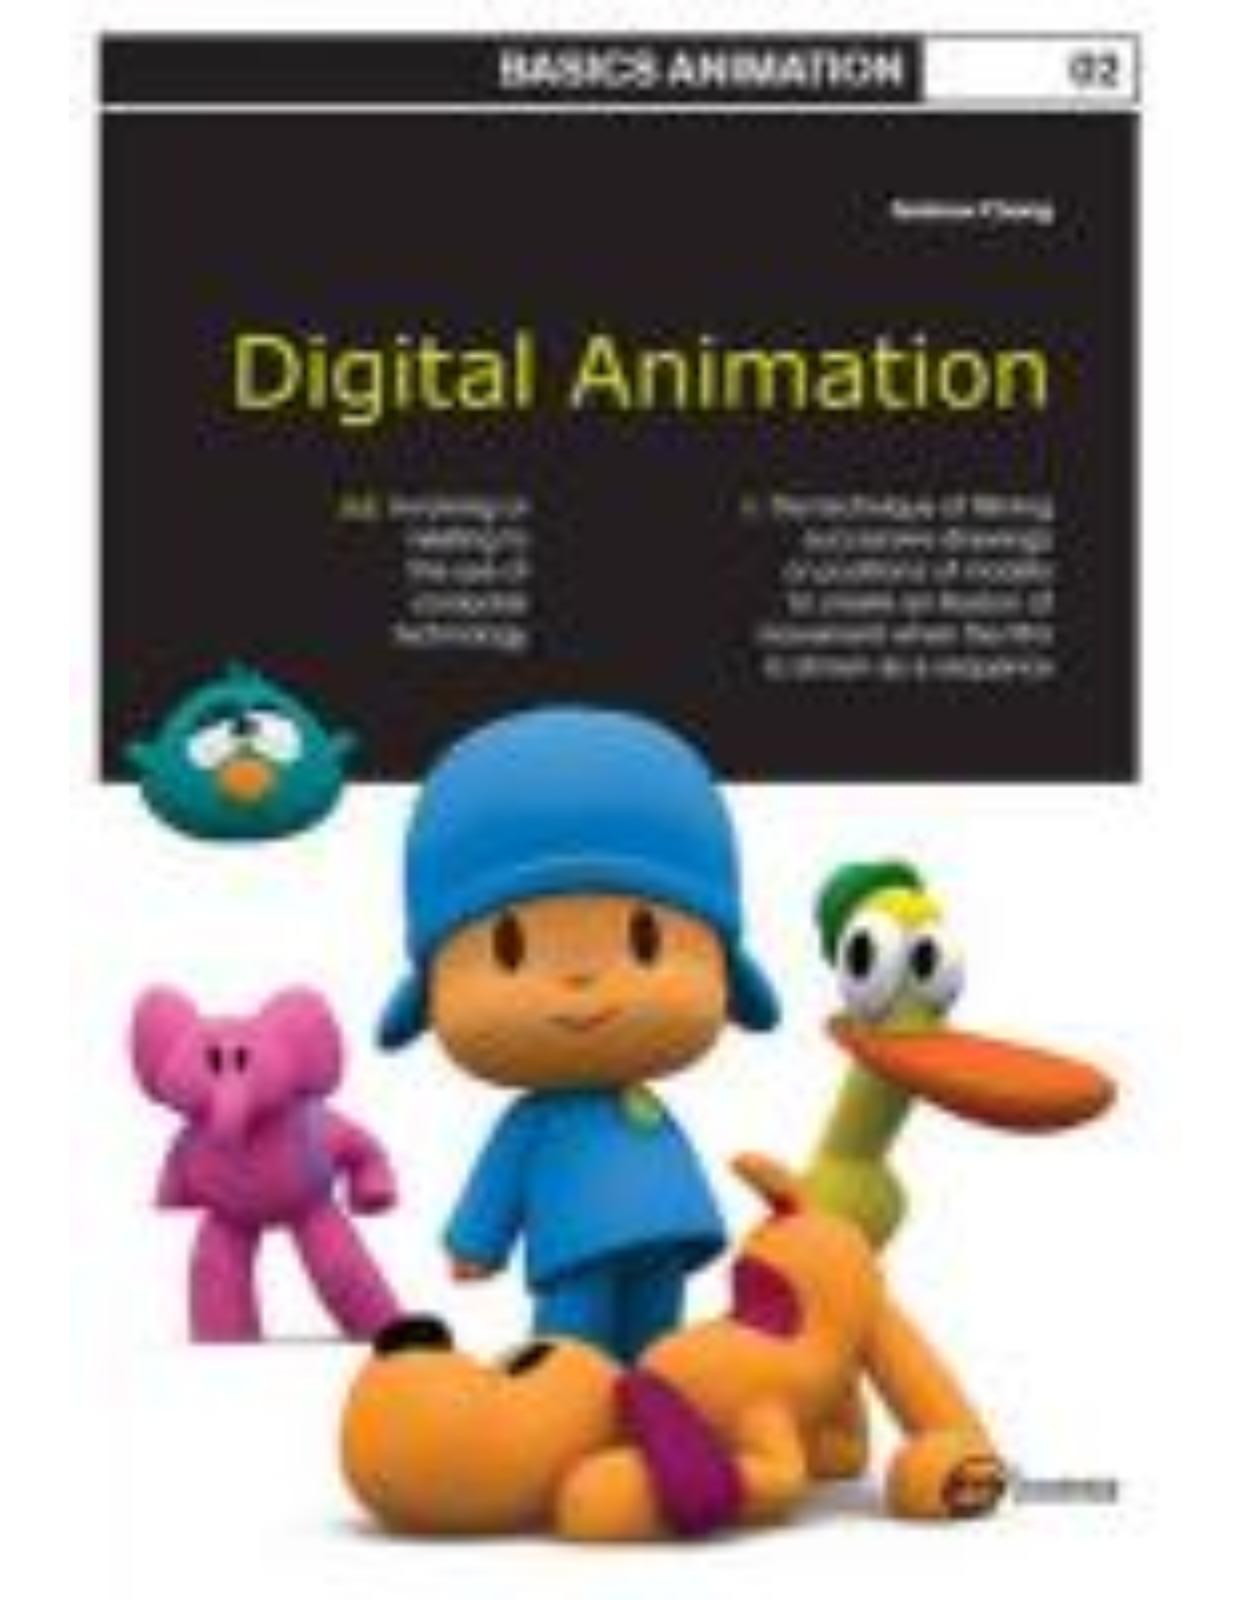 Basics Animation 02: Digital Animation: Digital Animation